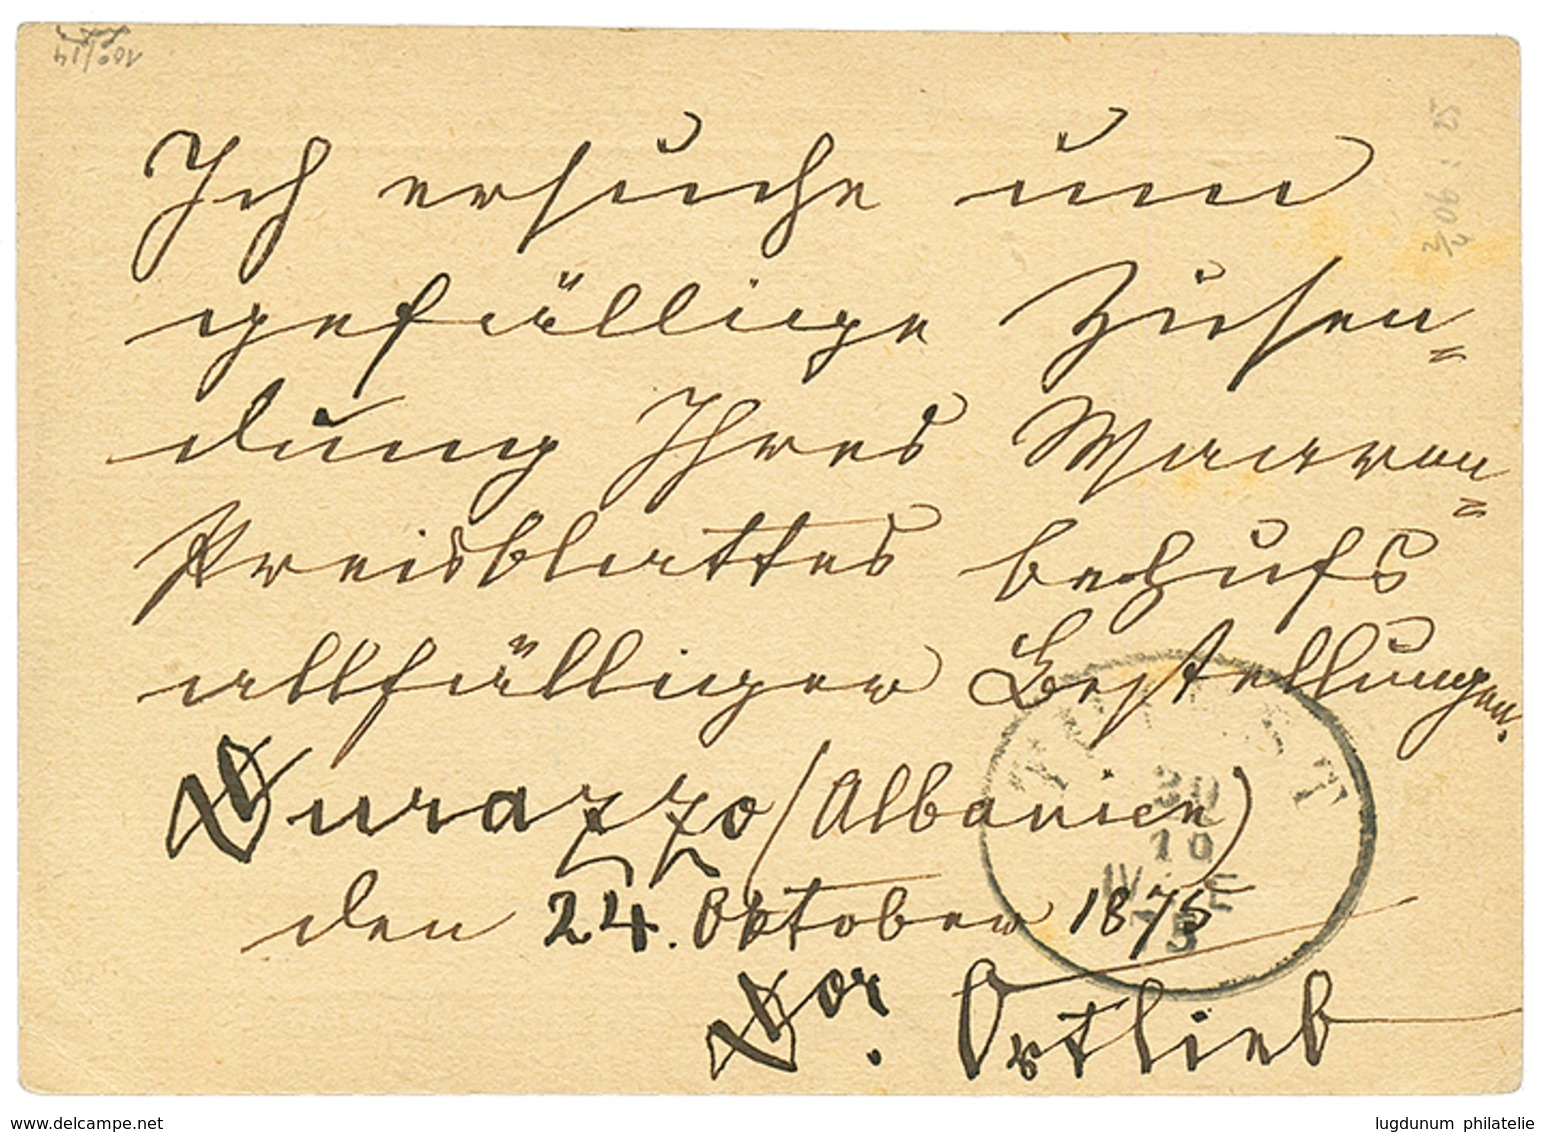 DURAZZO : 1875 P./Stat 5s Datelined "DURAZZO ALBANIEN" Via TRIESTE To INNSBRUCK (Tirol). Scarce. Vf. - Eastern Austria